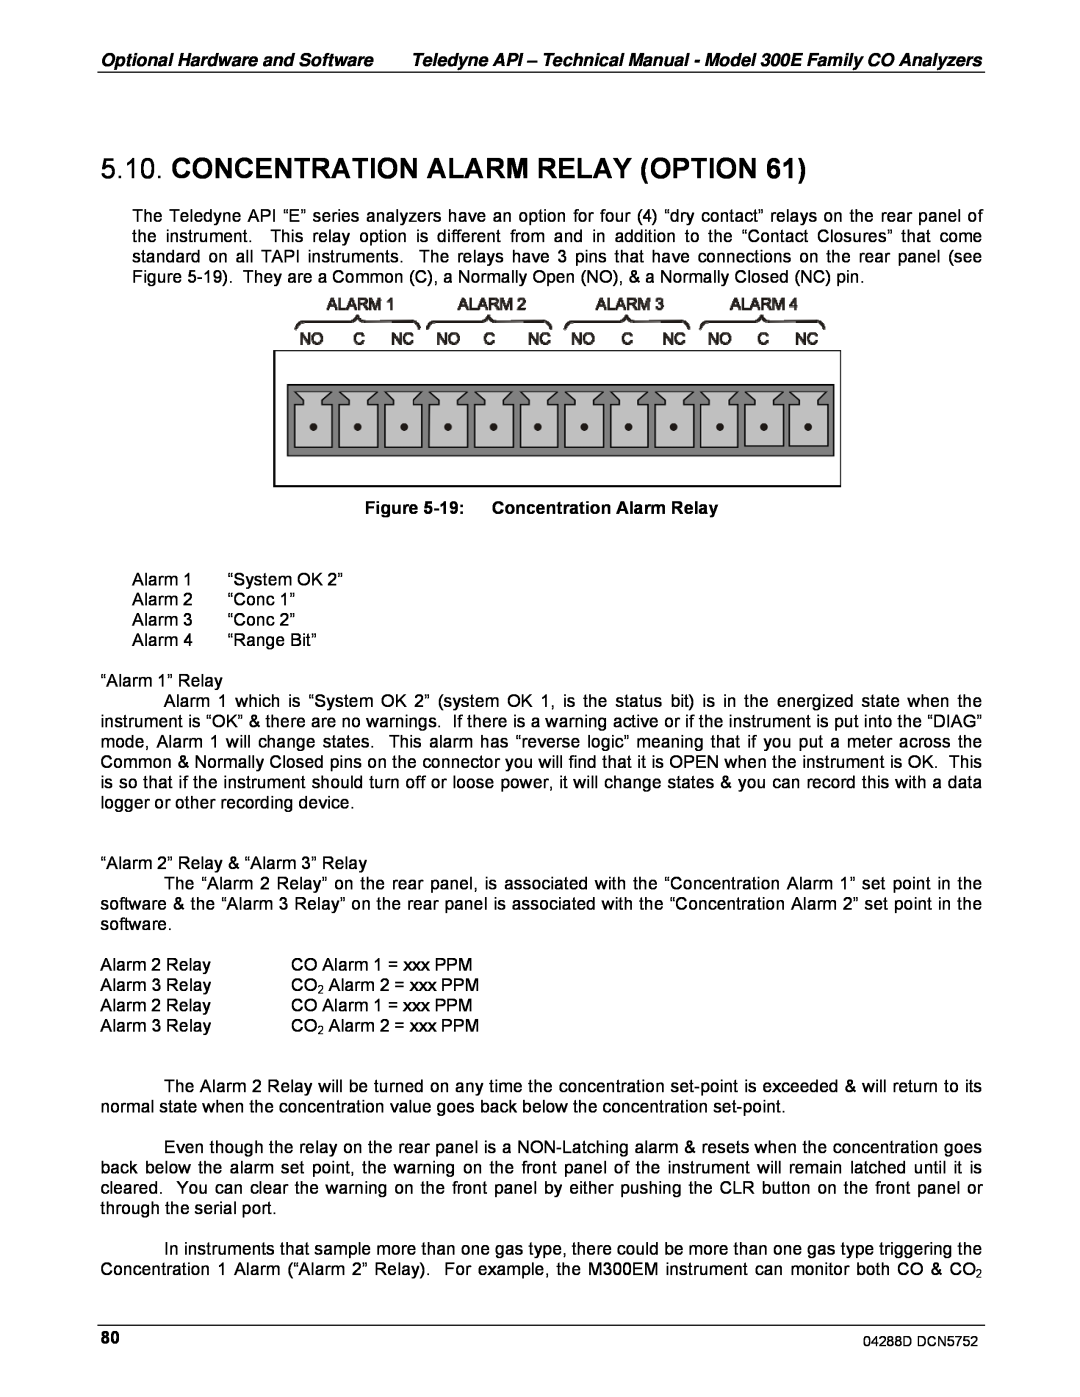 Teledyne M300EM operation manual Concentration Alarm Relay Option, 19:Concentration Alarm Relay 